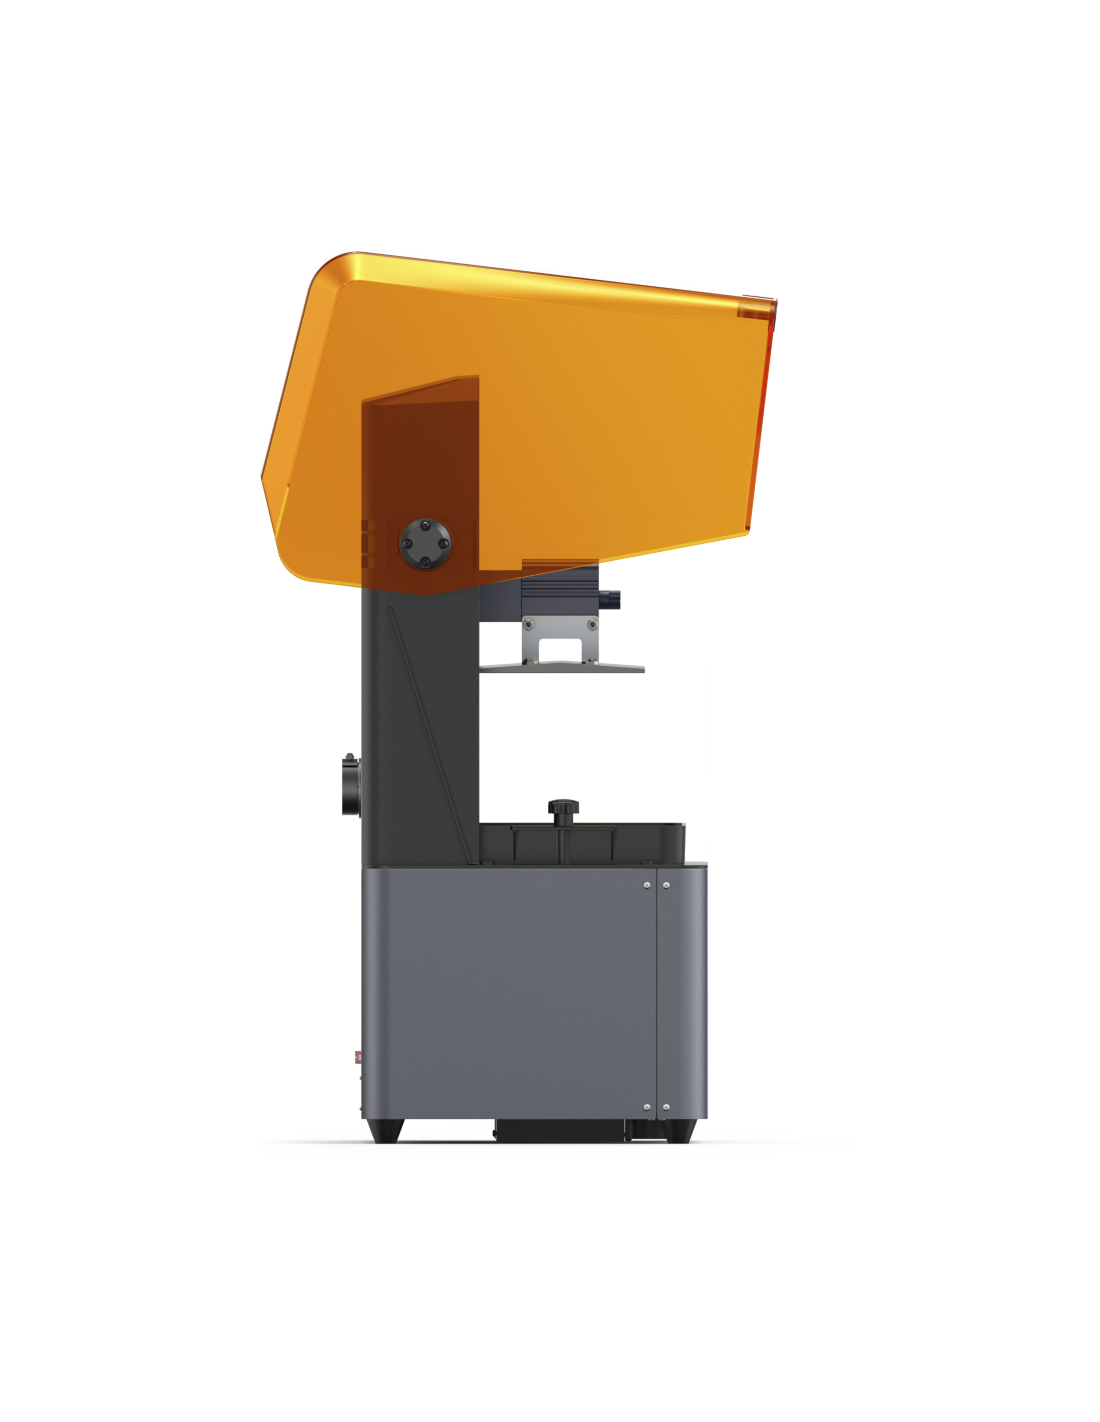 Creality Halot-Mage CL-103L impresora 3D resina Toledo